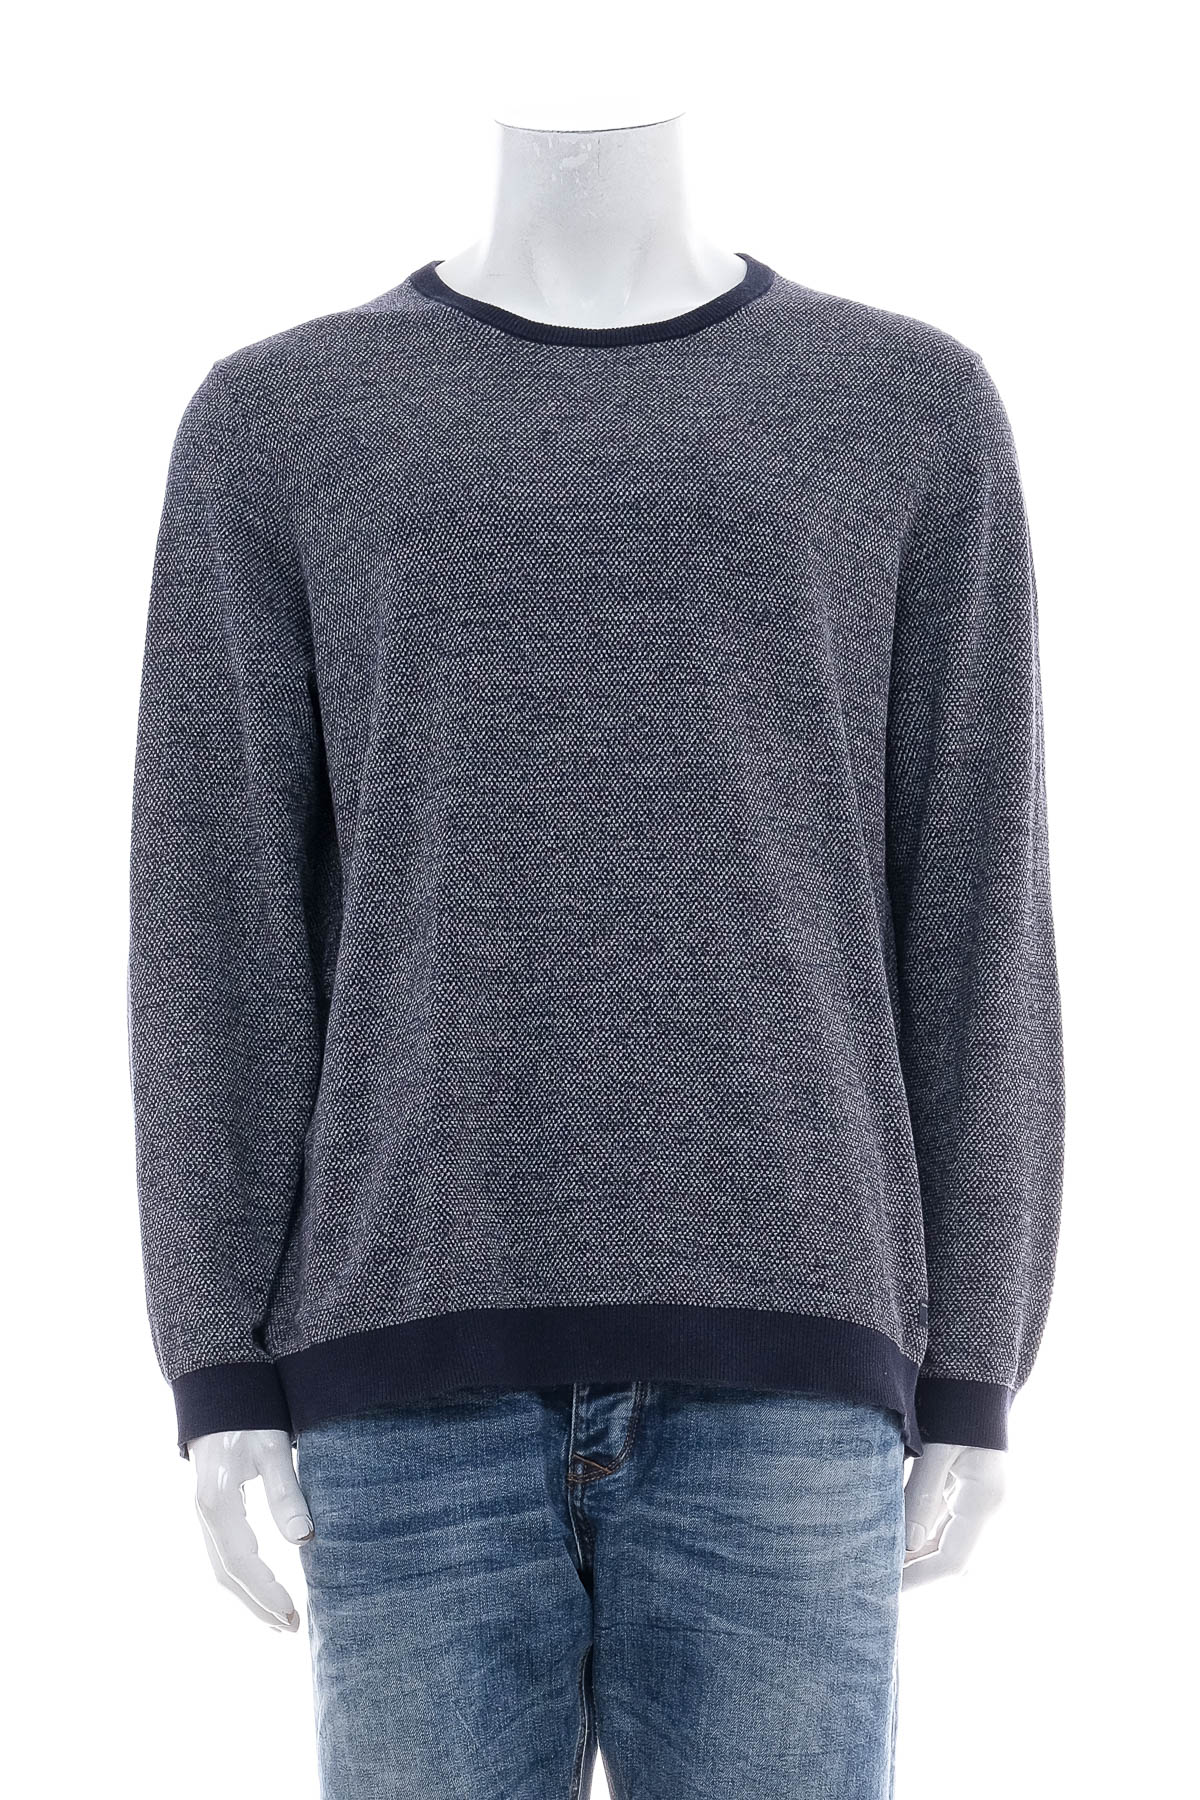 Men's sweater - S.Oliver - 0